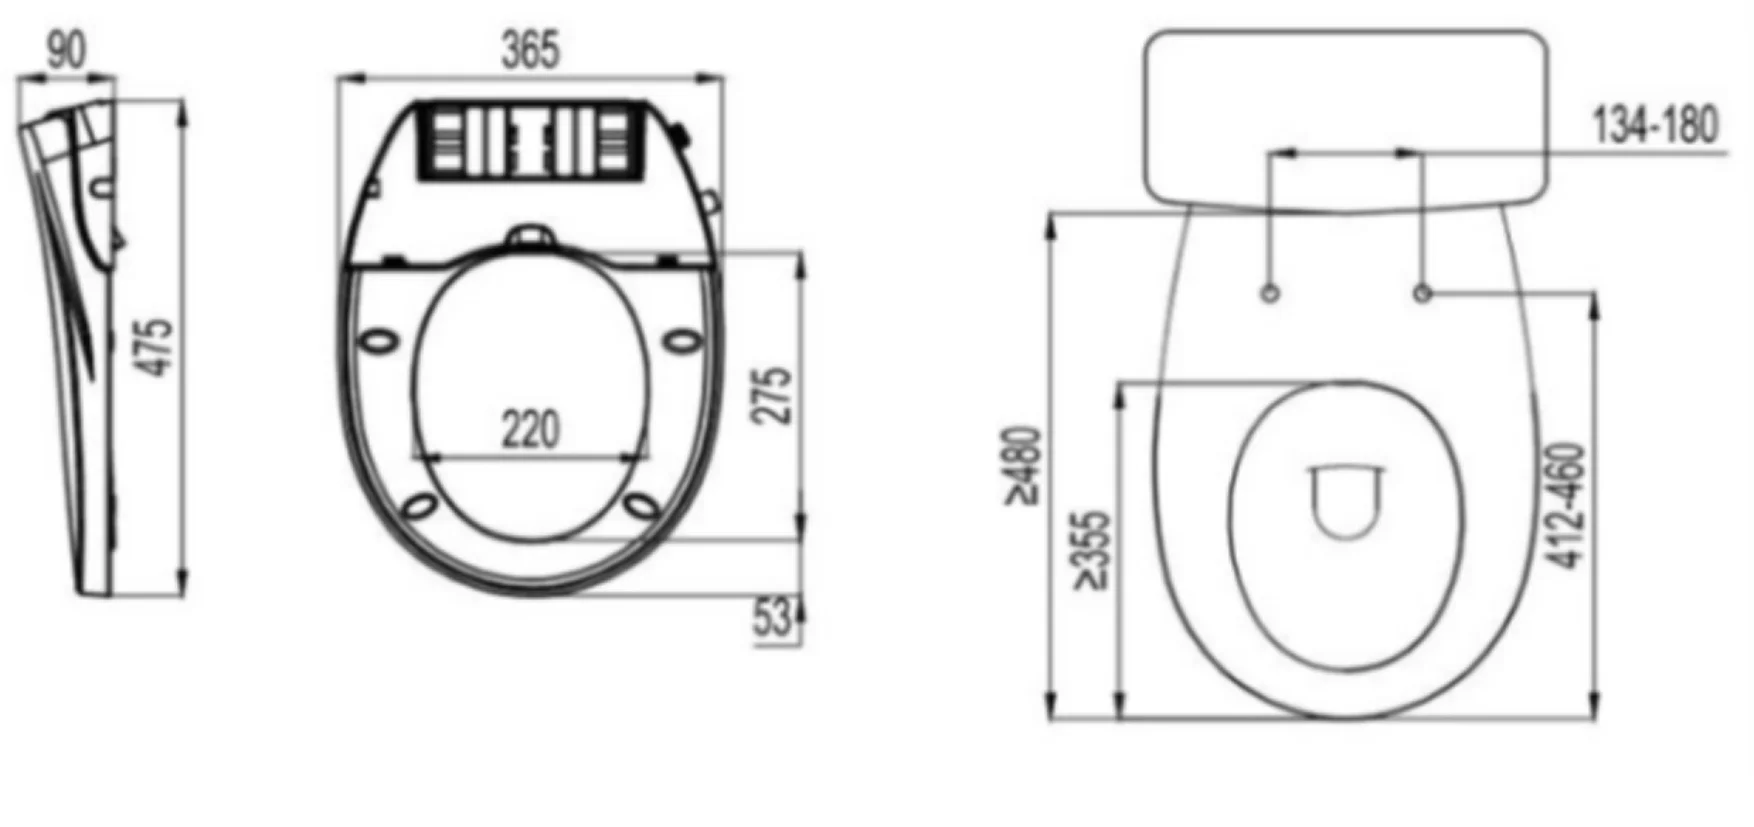 Watermark Standard Round Shape Toilet Seat Bidet Waterproof Smart Bidet Toilet Seat BT001